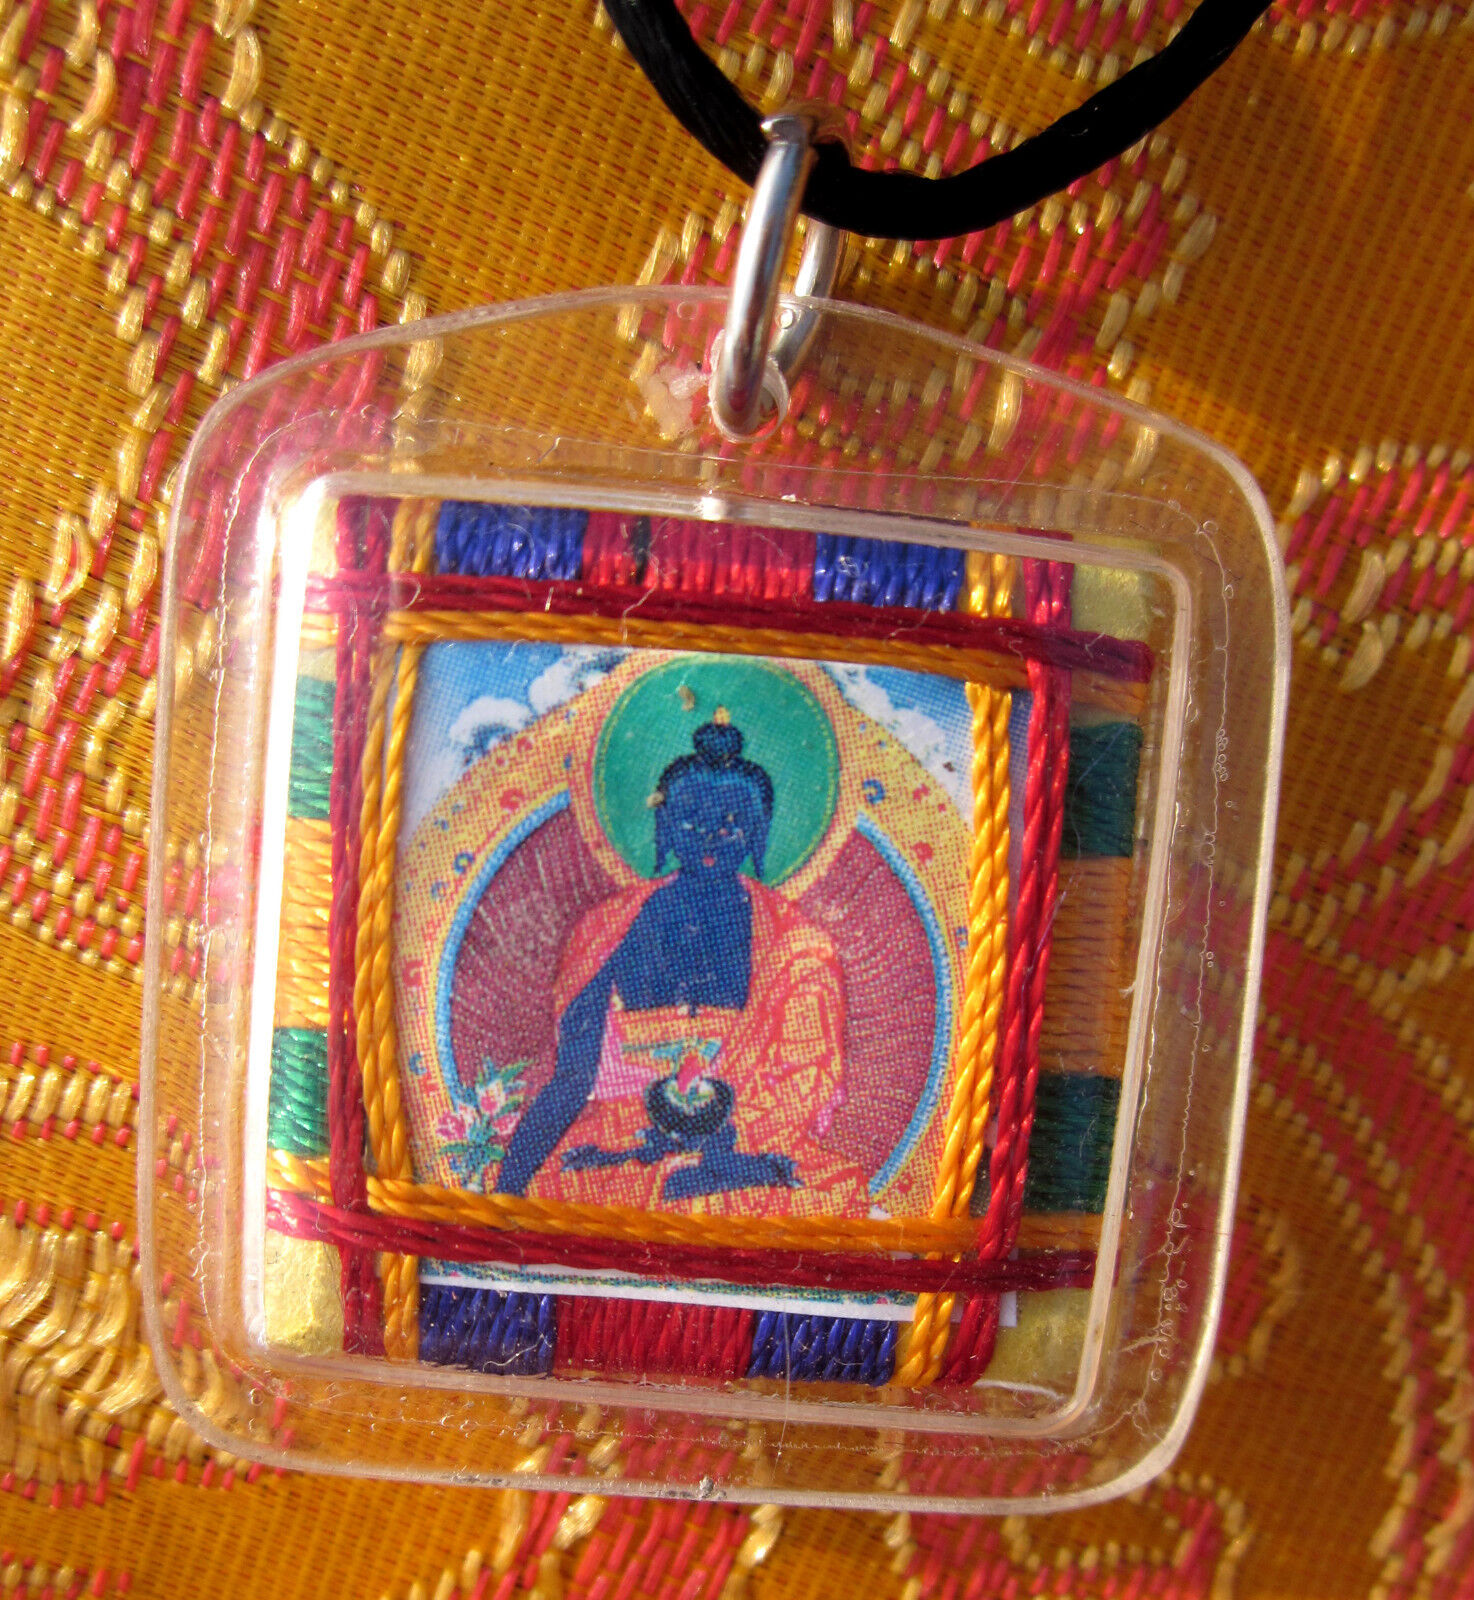 HEALING PROTECTIVE MEDICINE BUDDHA TIBETAN BUDDHIST PENDANT AMULET BLACK CORD